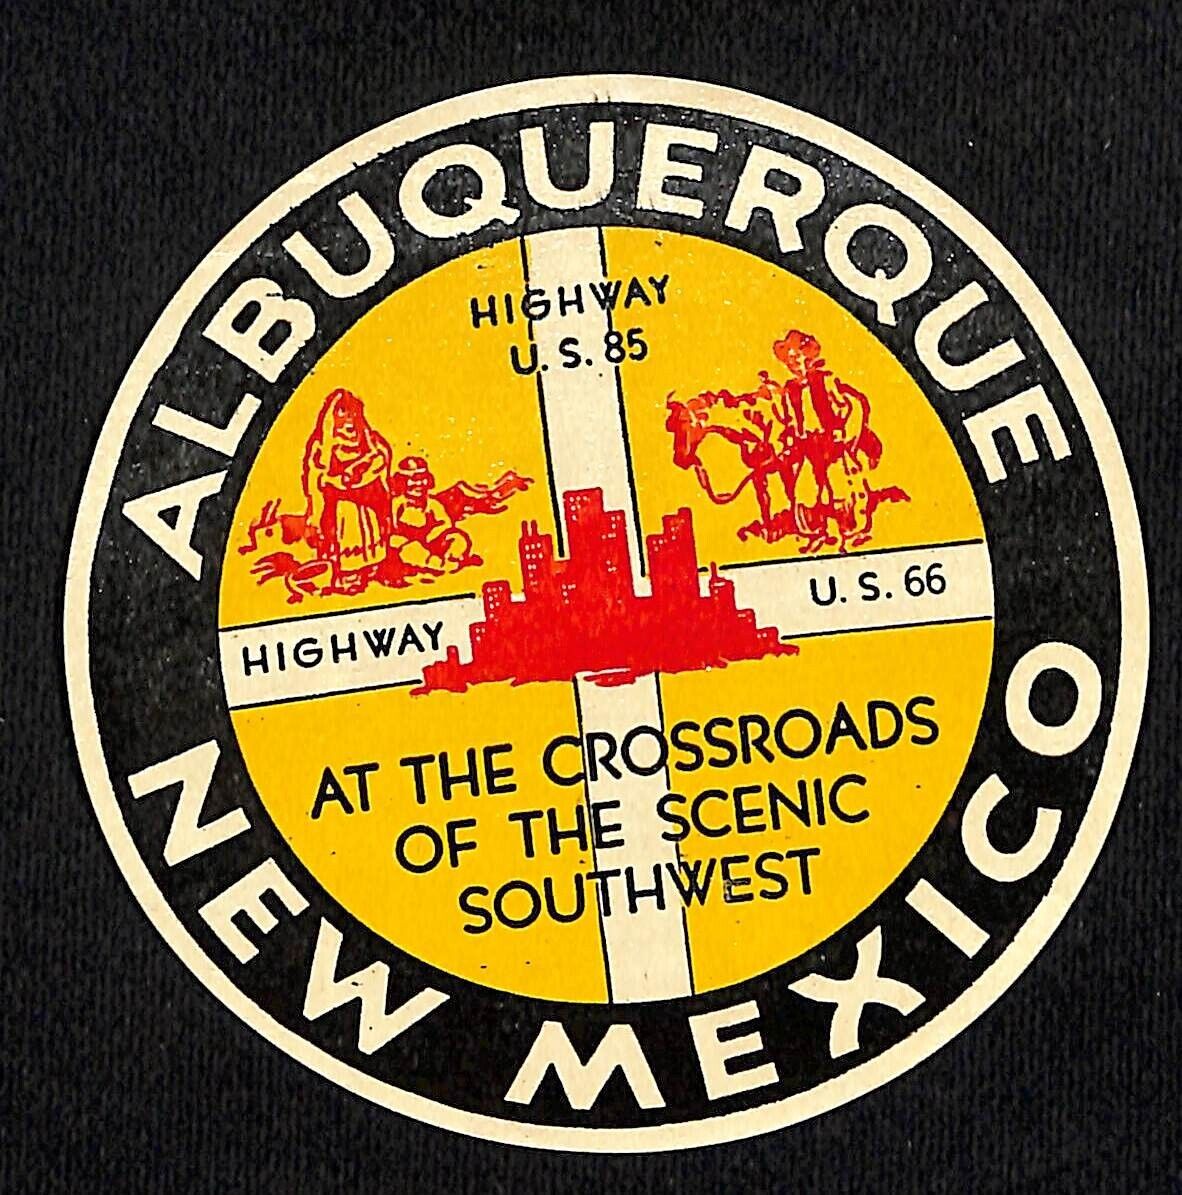 U.S. Highway 66 & 85 Crossroads Albuquerque Advertising Circular c1930's-40's